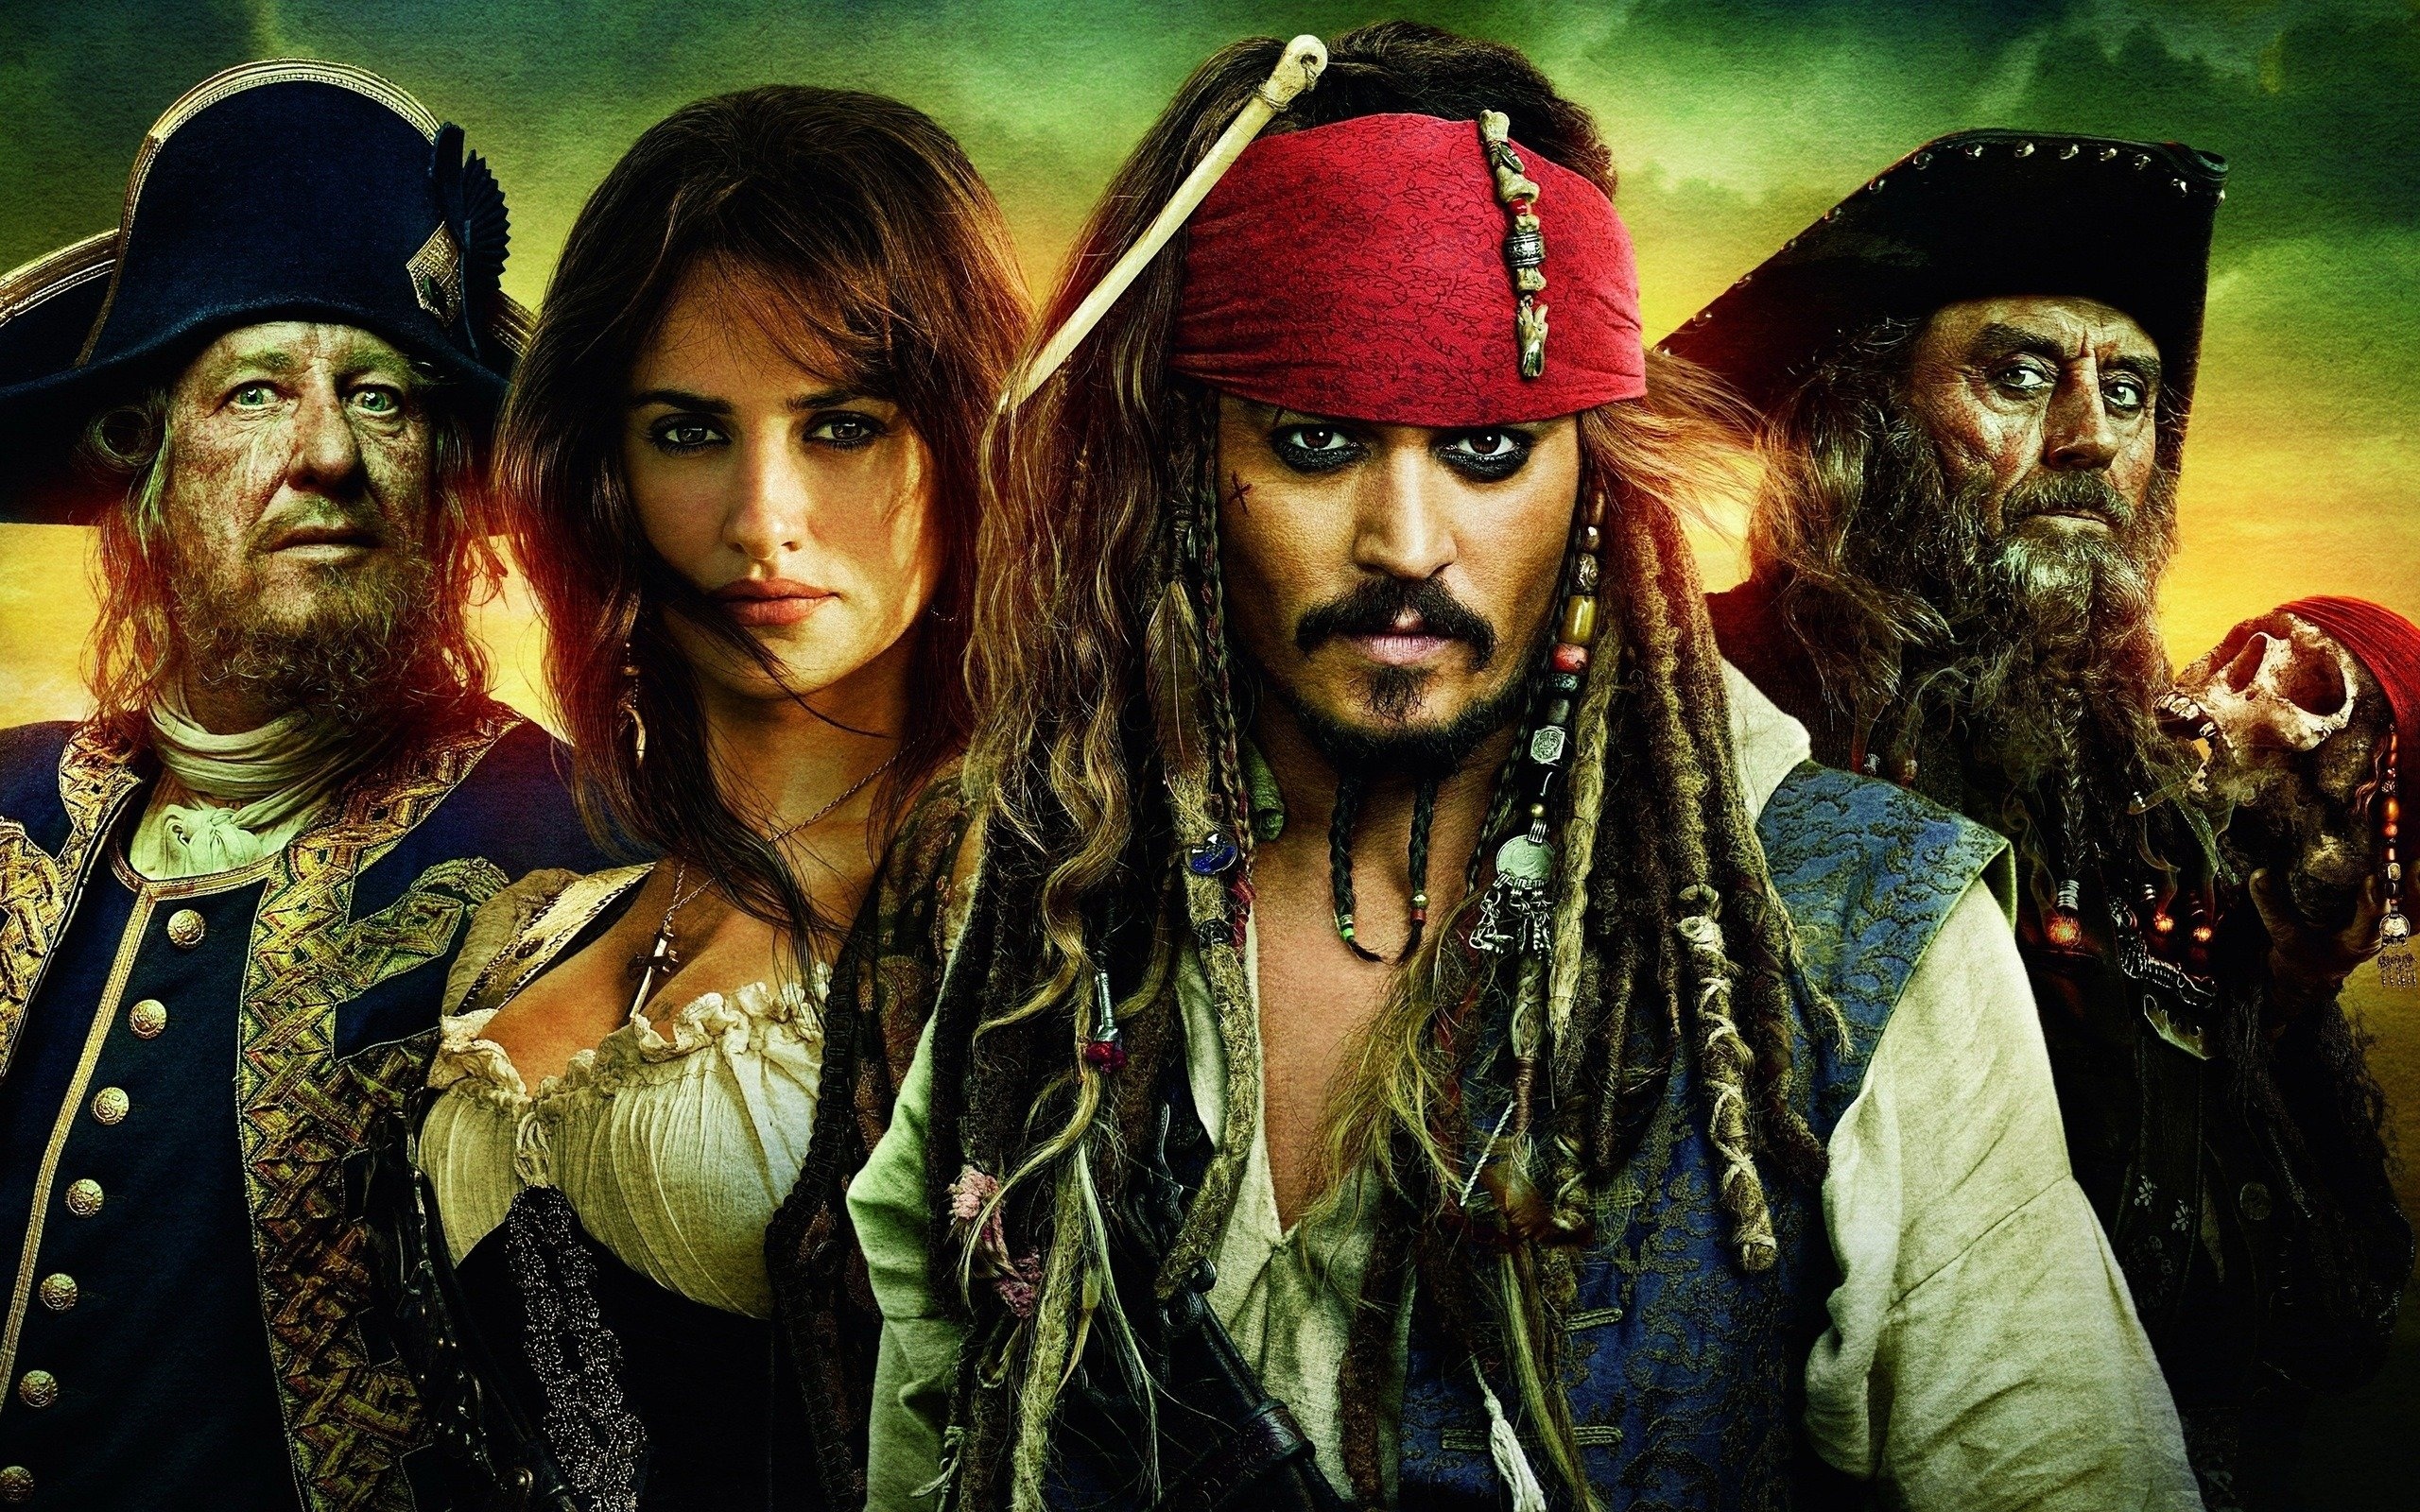 Barbossa, Desktop backgrounds, Pirates of the Caribbean, Movie wallpapers, 2560x1600 HD Desktop